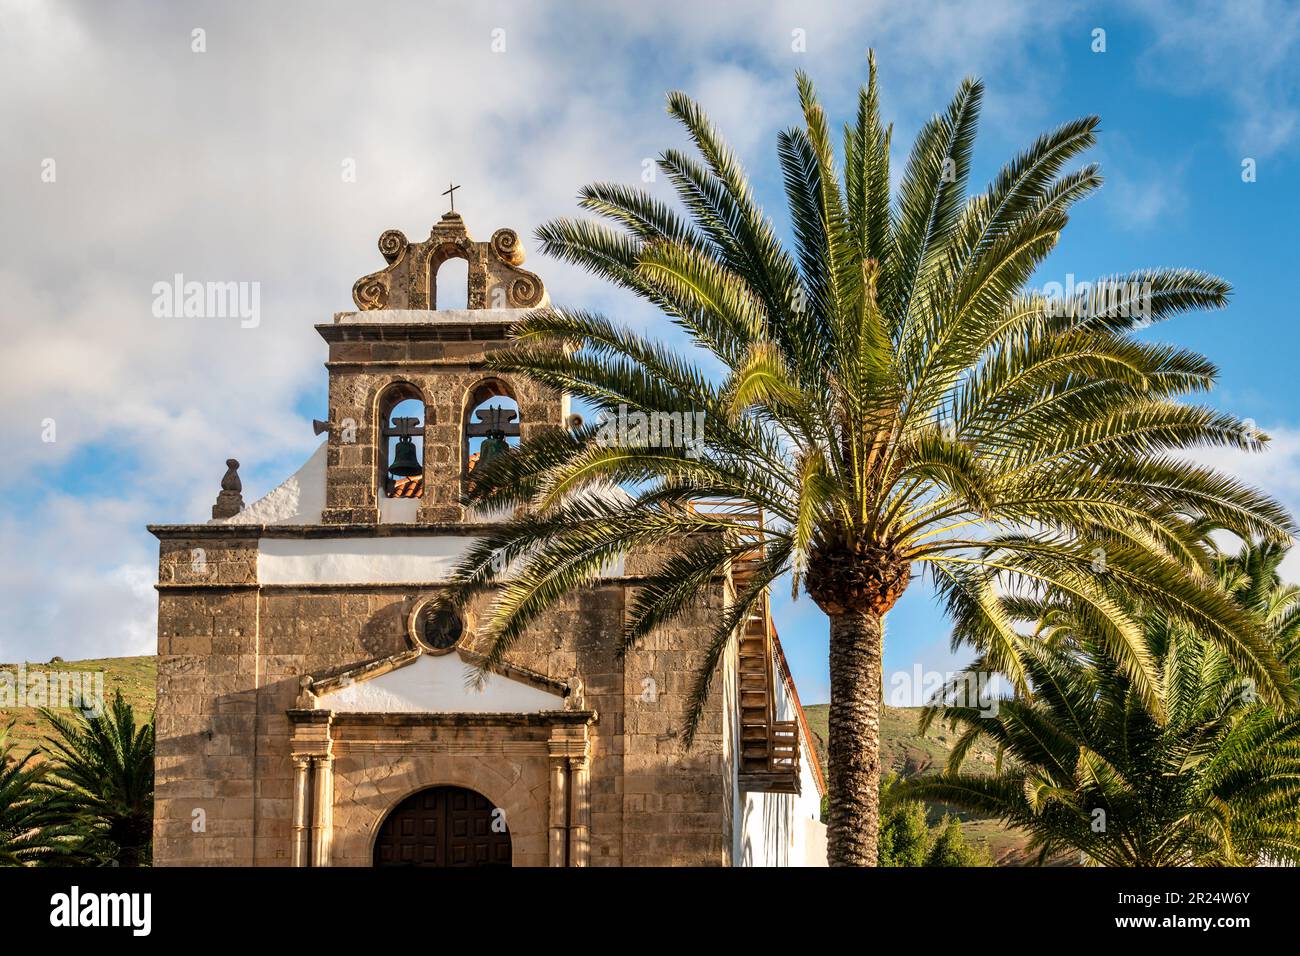 Iglesia de Nuestra Senora de la pena,Vega Rio Palma, Fuerteventura, Kanarische Inseln, Spanien Foto Stock